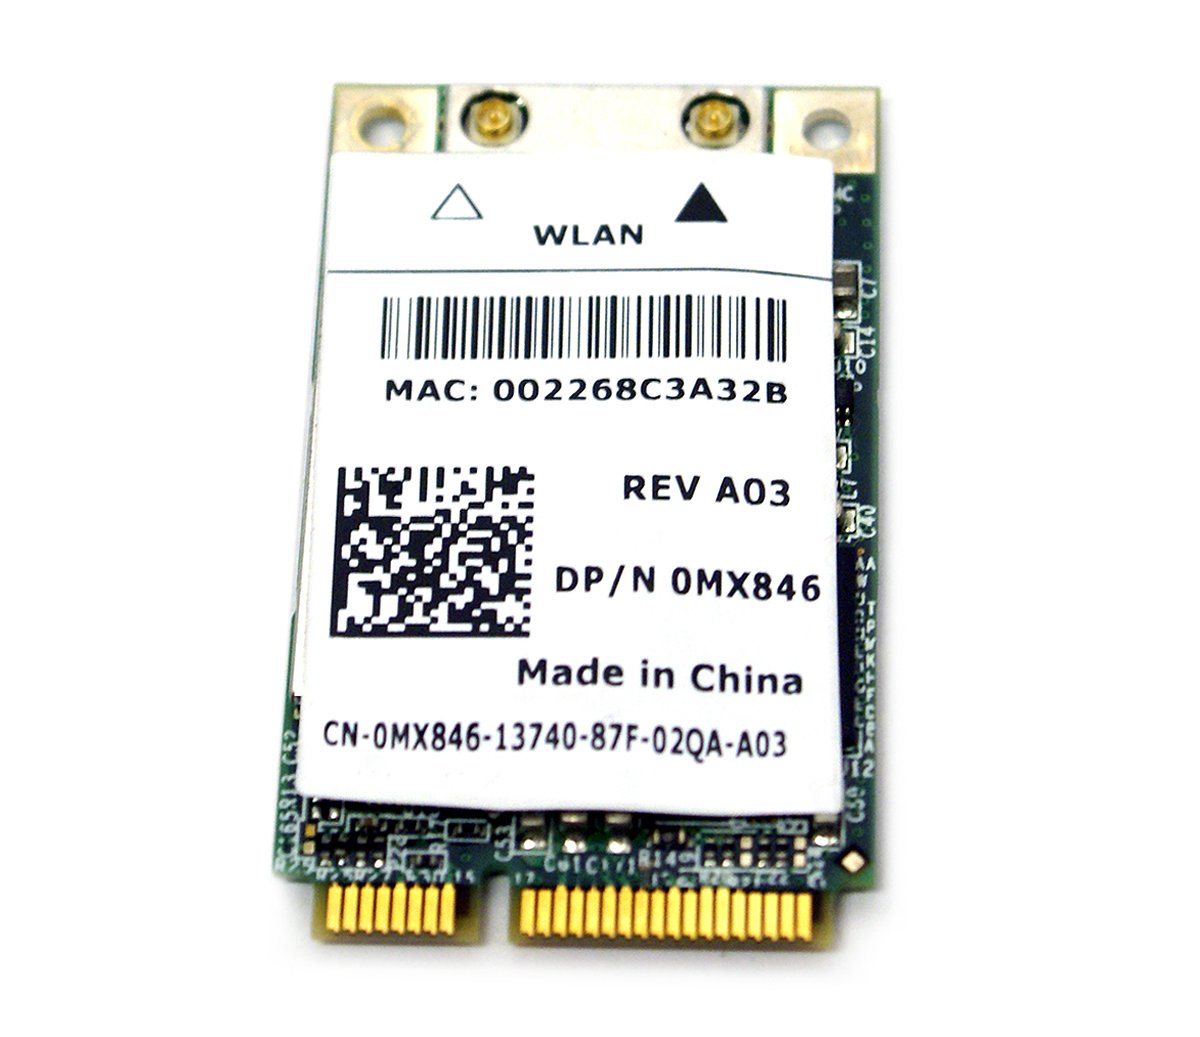 ambit 802.11 wireless lan mini pci driver